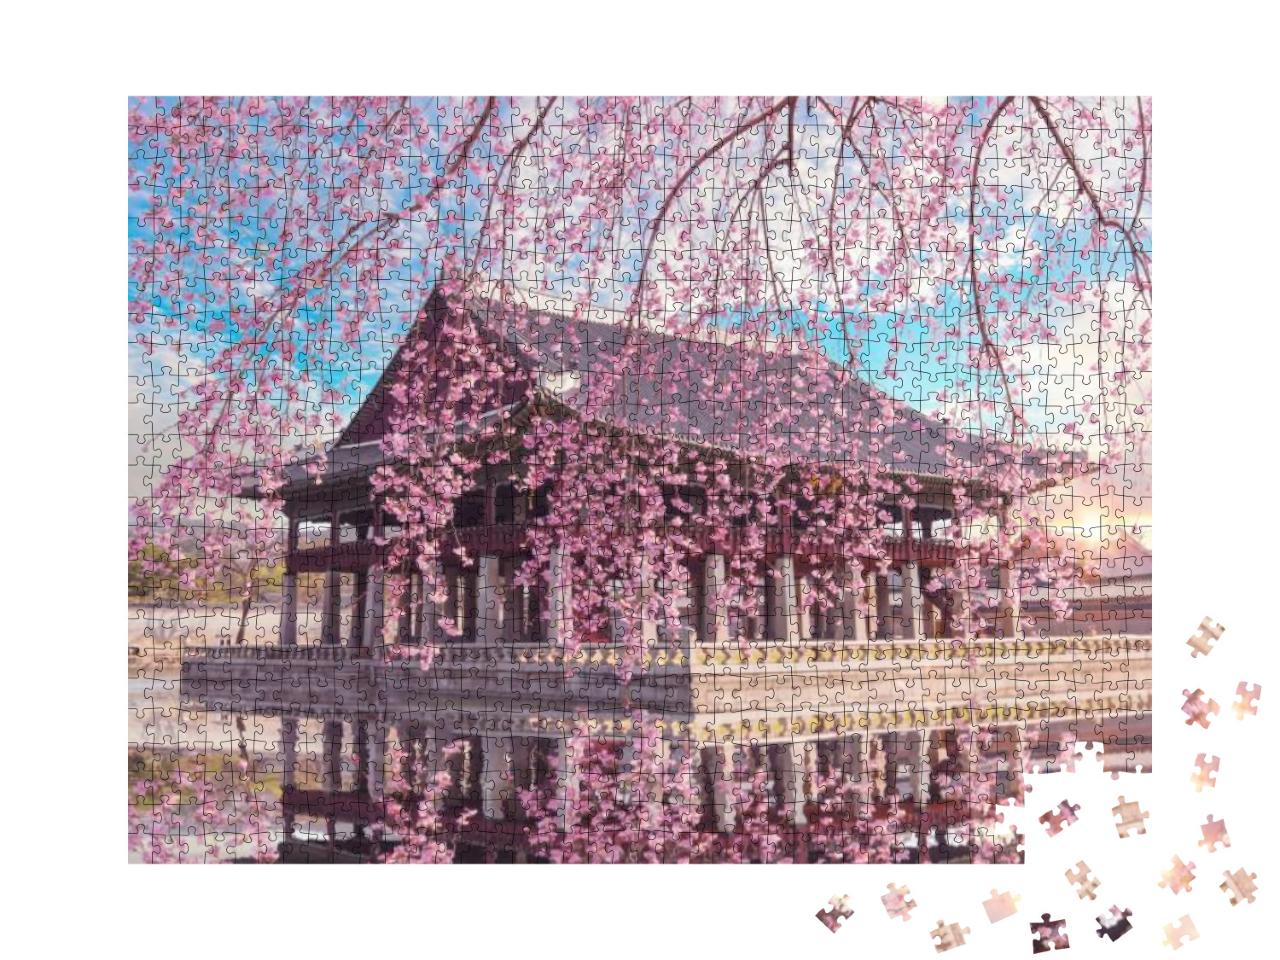 Puzzle 1000 Teile „Üppige Kirschblüte am Gyeongbokgung-Palast in Seoul, Südkorea“